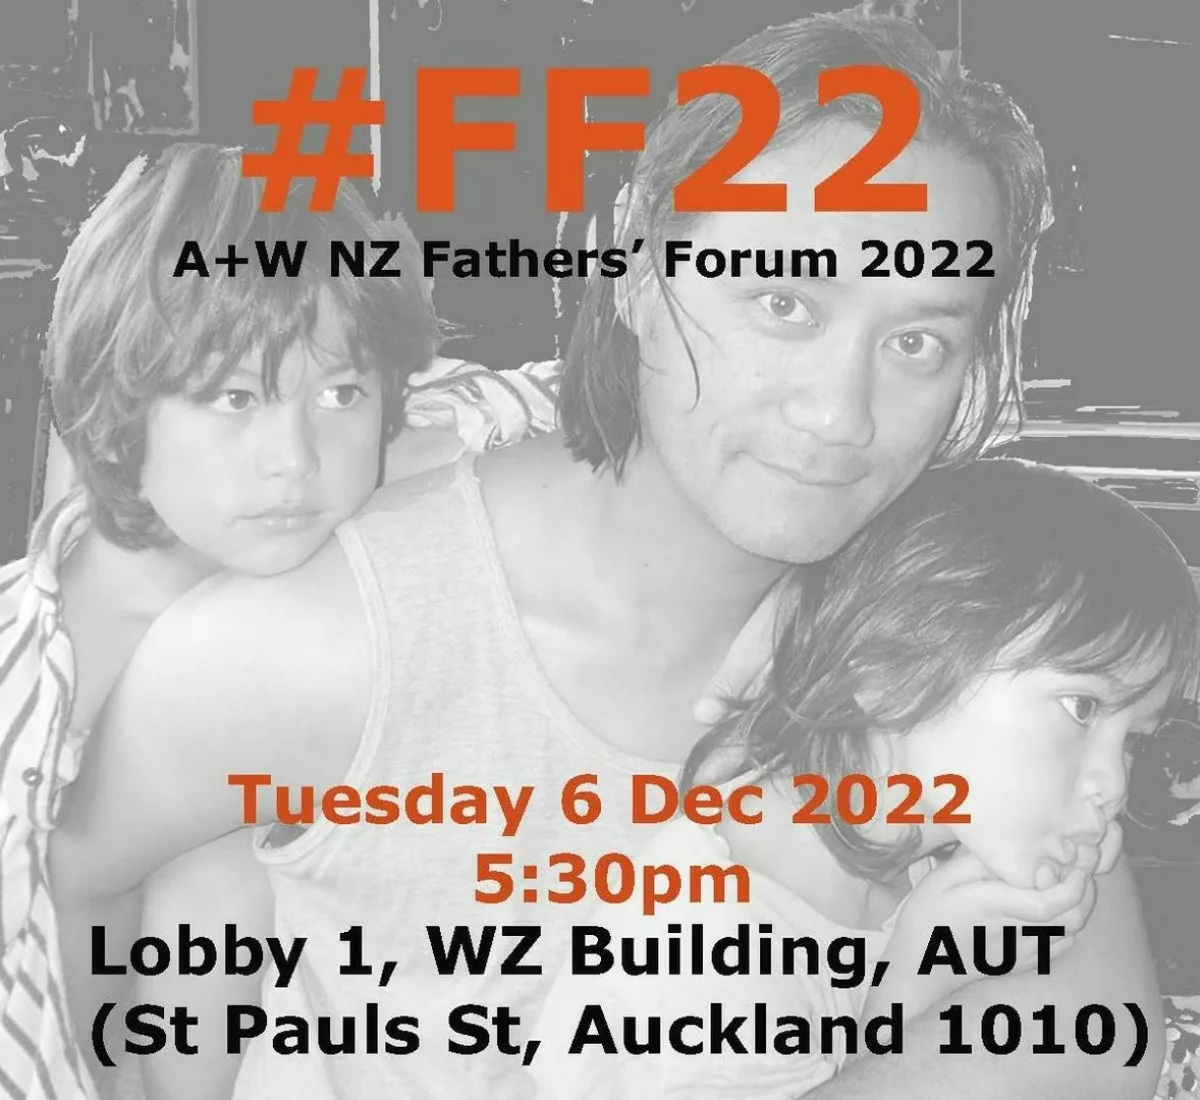 Ff22 fathers forum 6 dec 2022 22